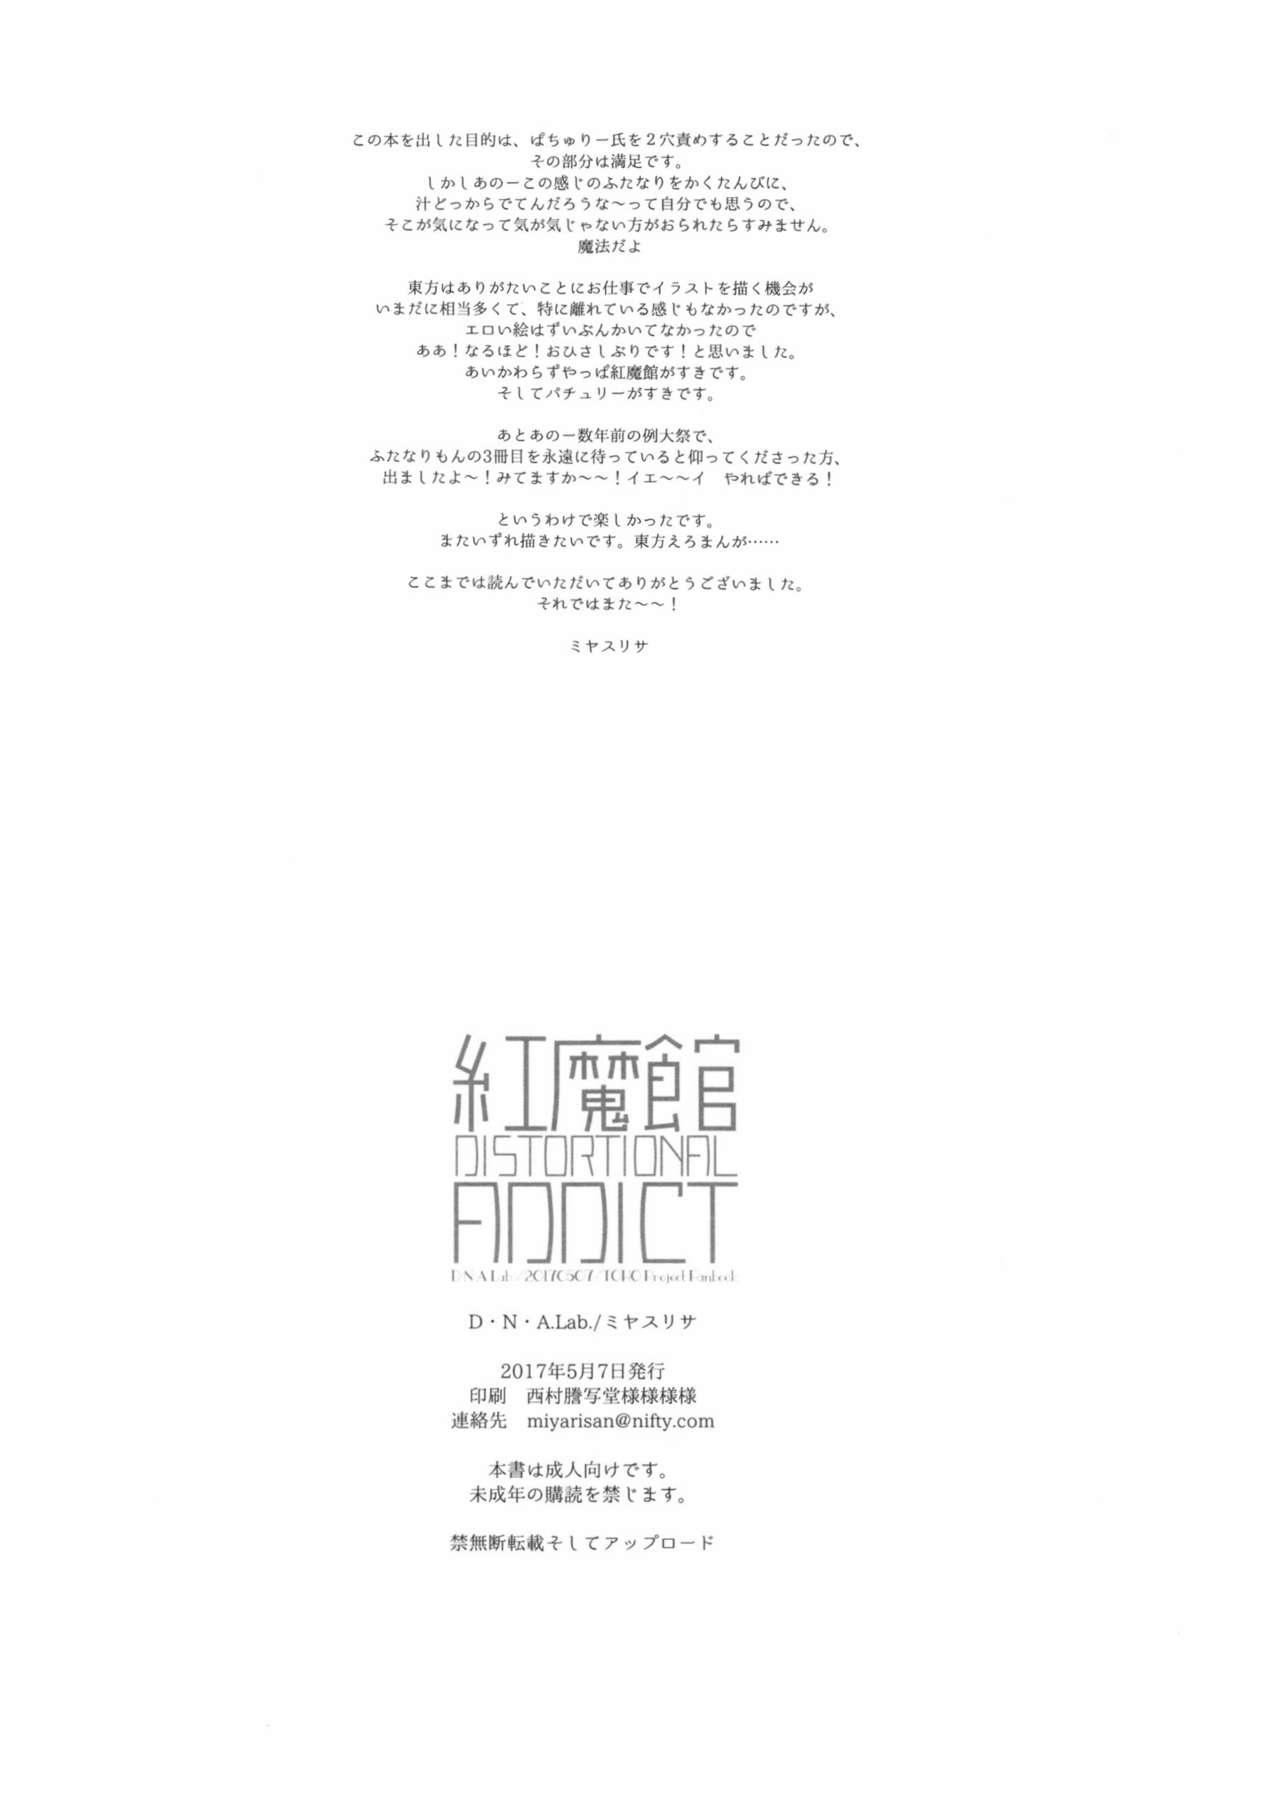 Naughty Koumakan DISTORTIONAL ADDICT - Touhou project Korea - Page 21